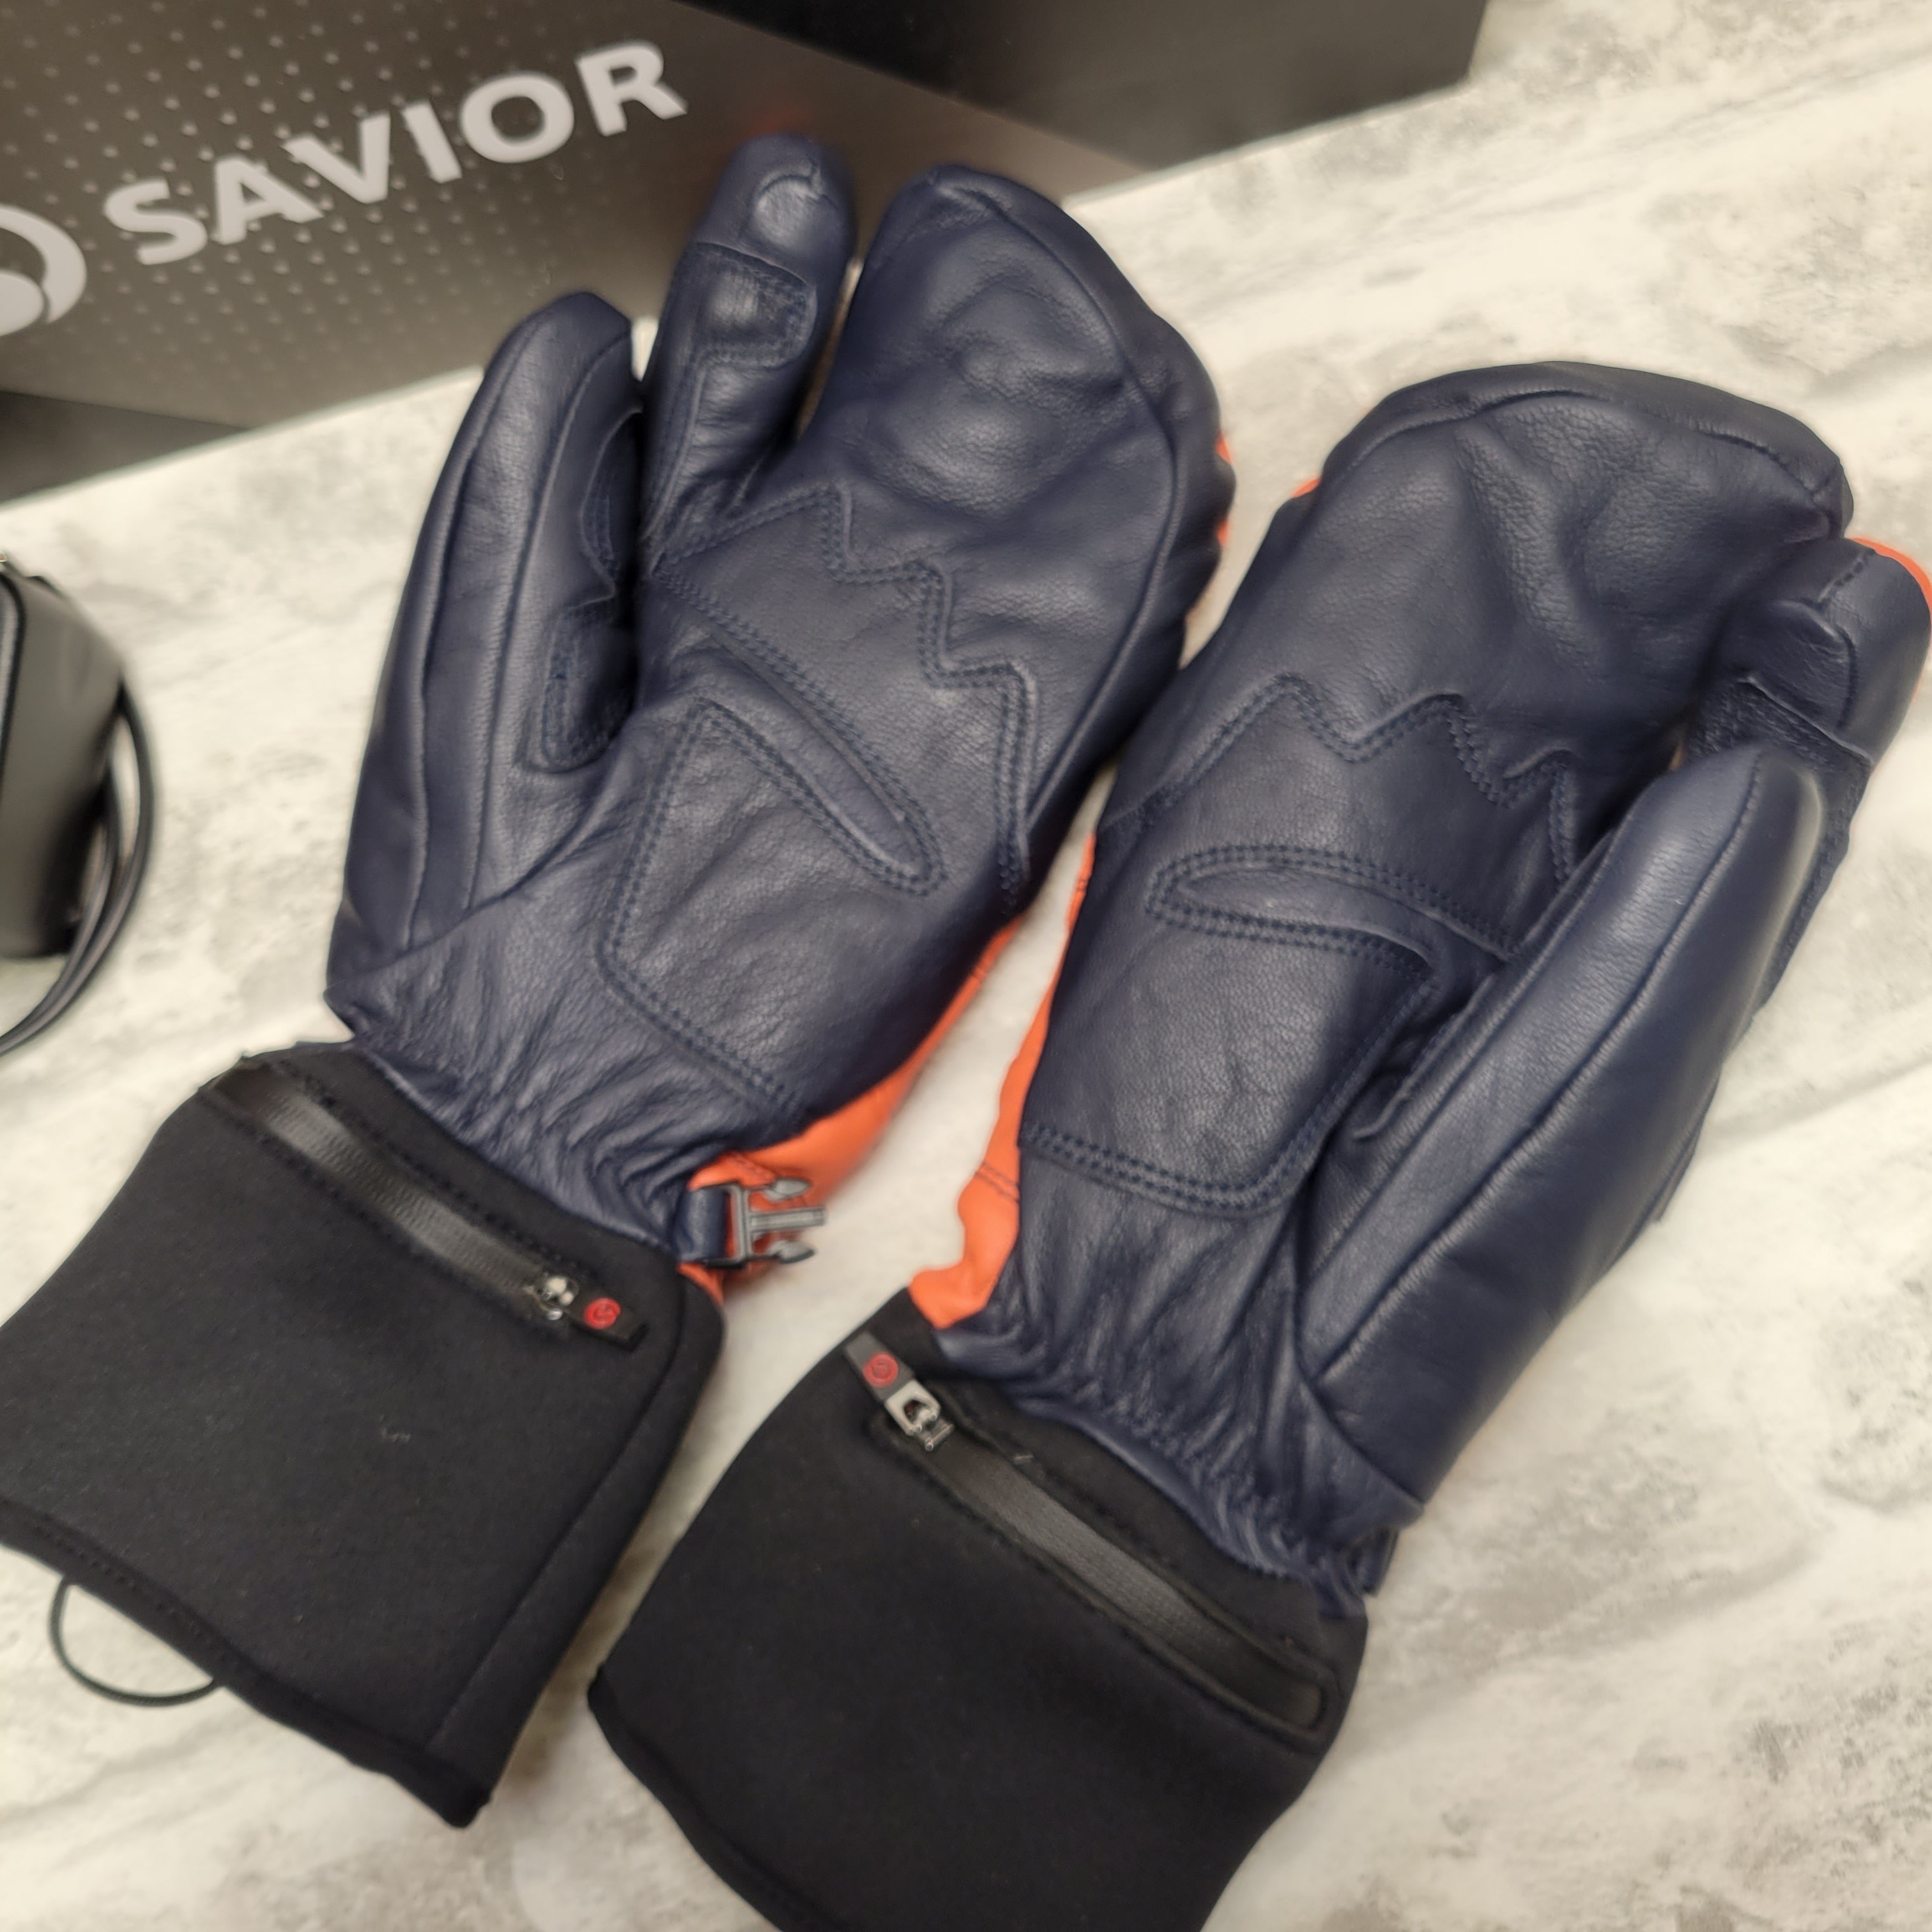 SAVIOR HEAT Heated Ski Mittens Leather Thick Gloves, Orange/Navy, Large